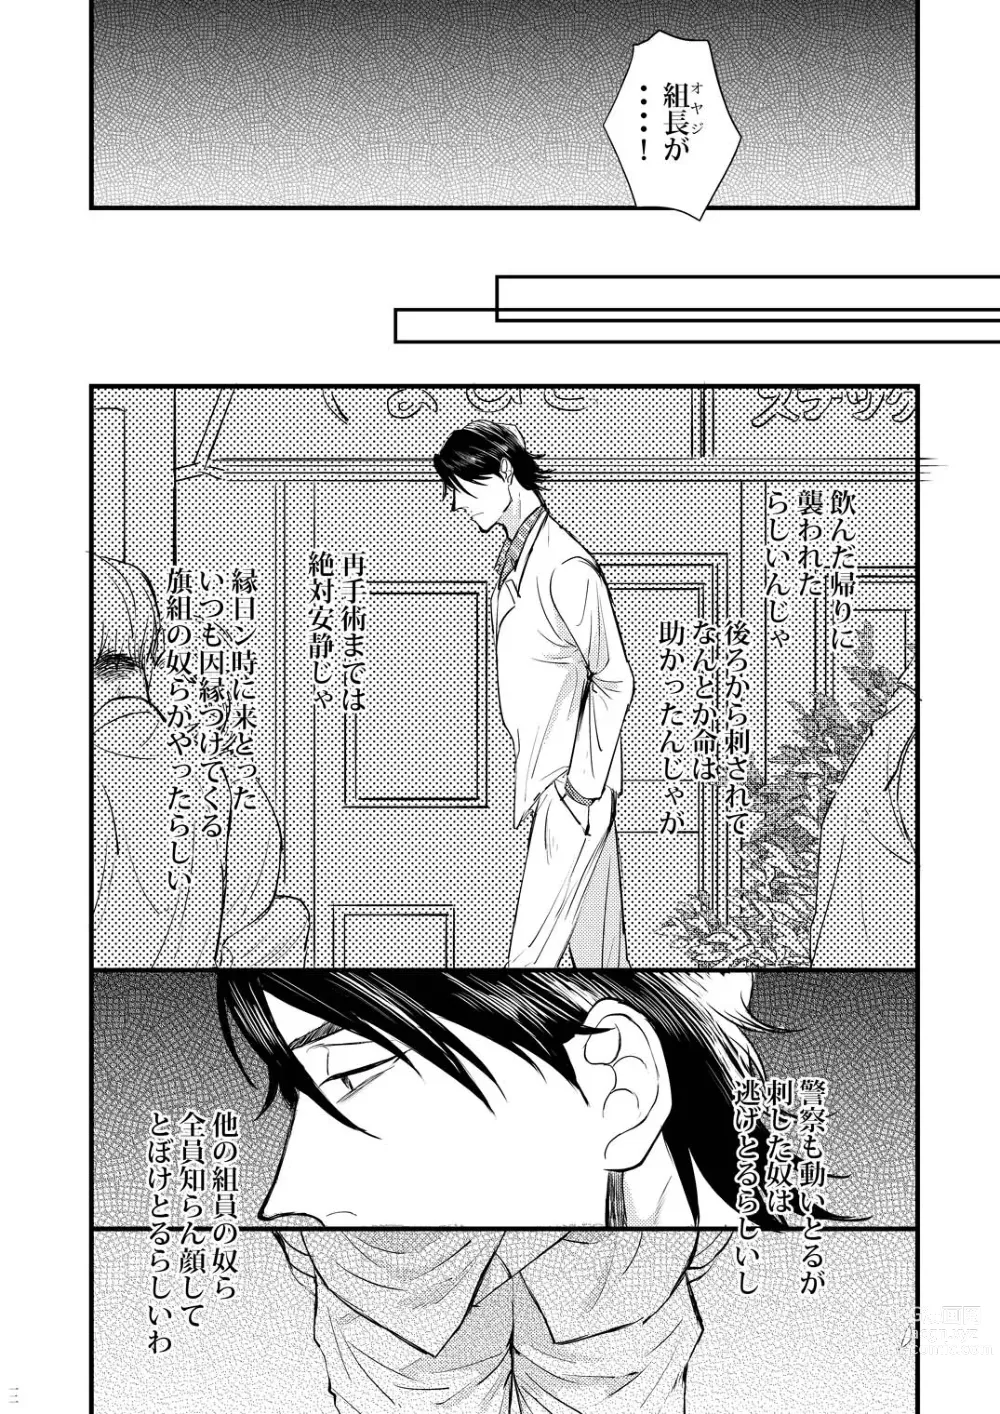 Page 11 of doujinshi Kagerou